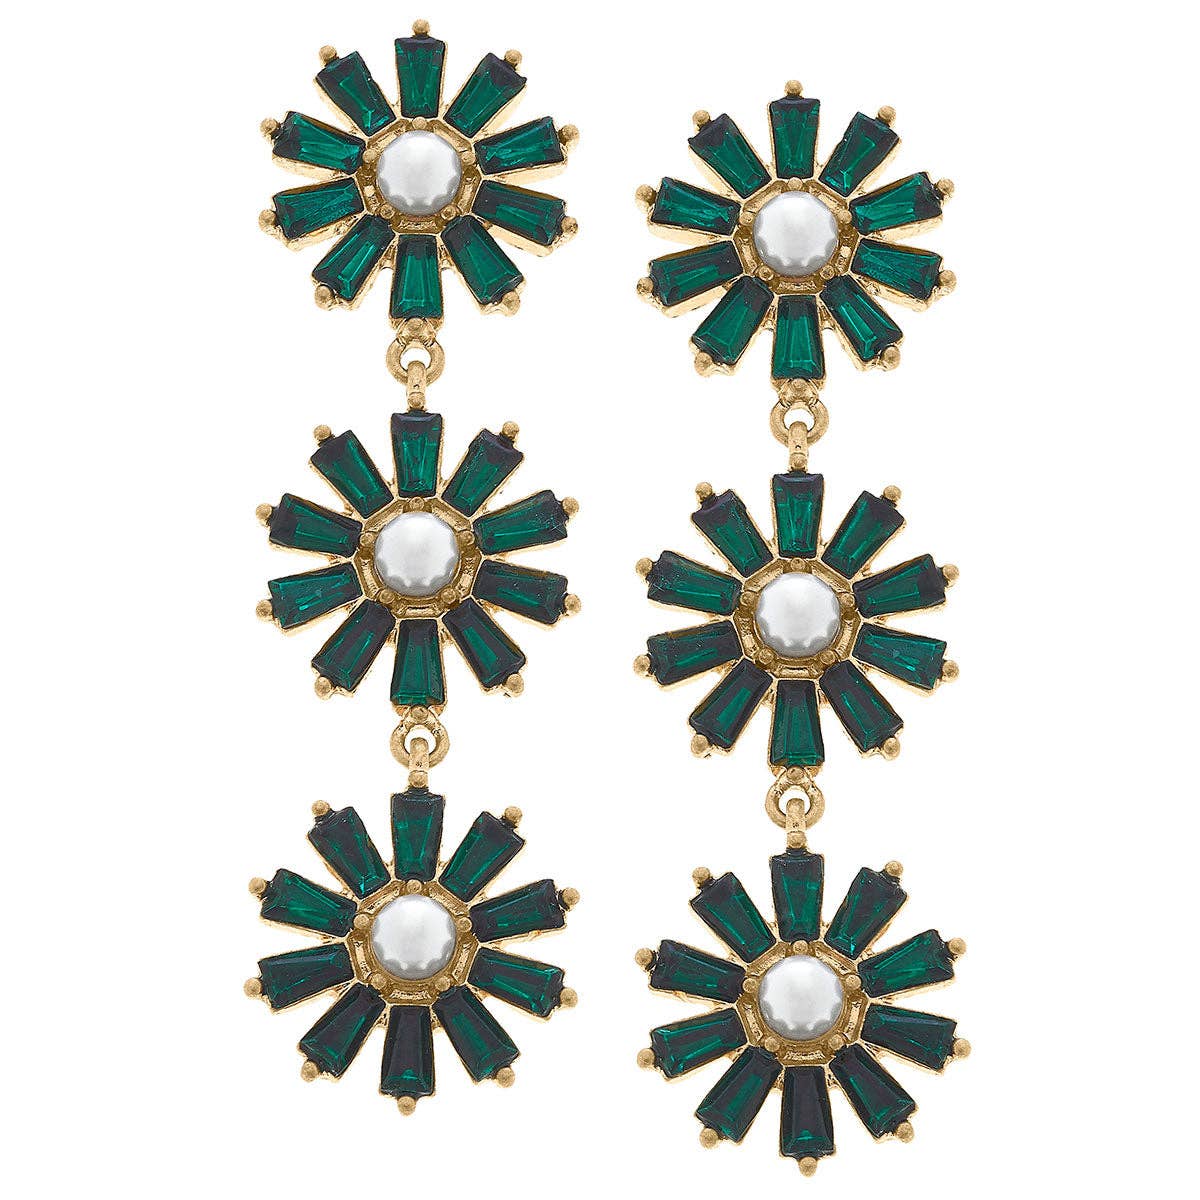 Amelia Pearl and Rhinestone Linked Drop Earrings in Emerald - Pretty Crafty Lady Shop